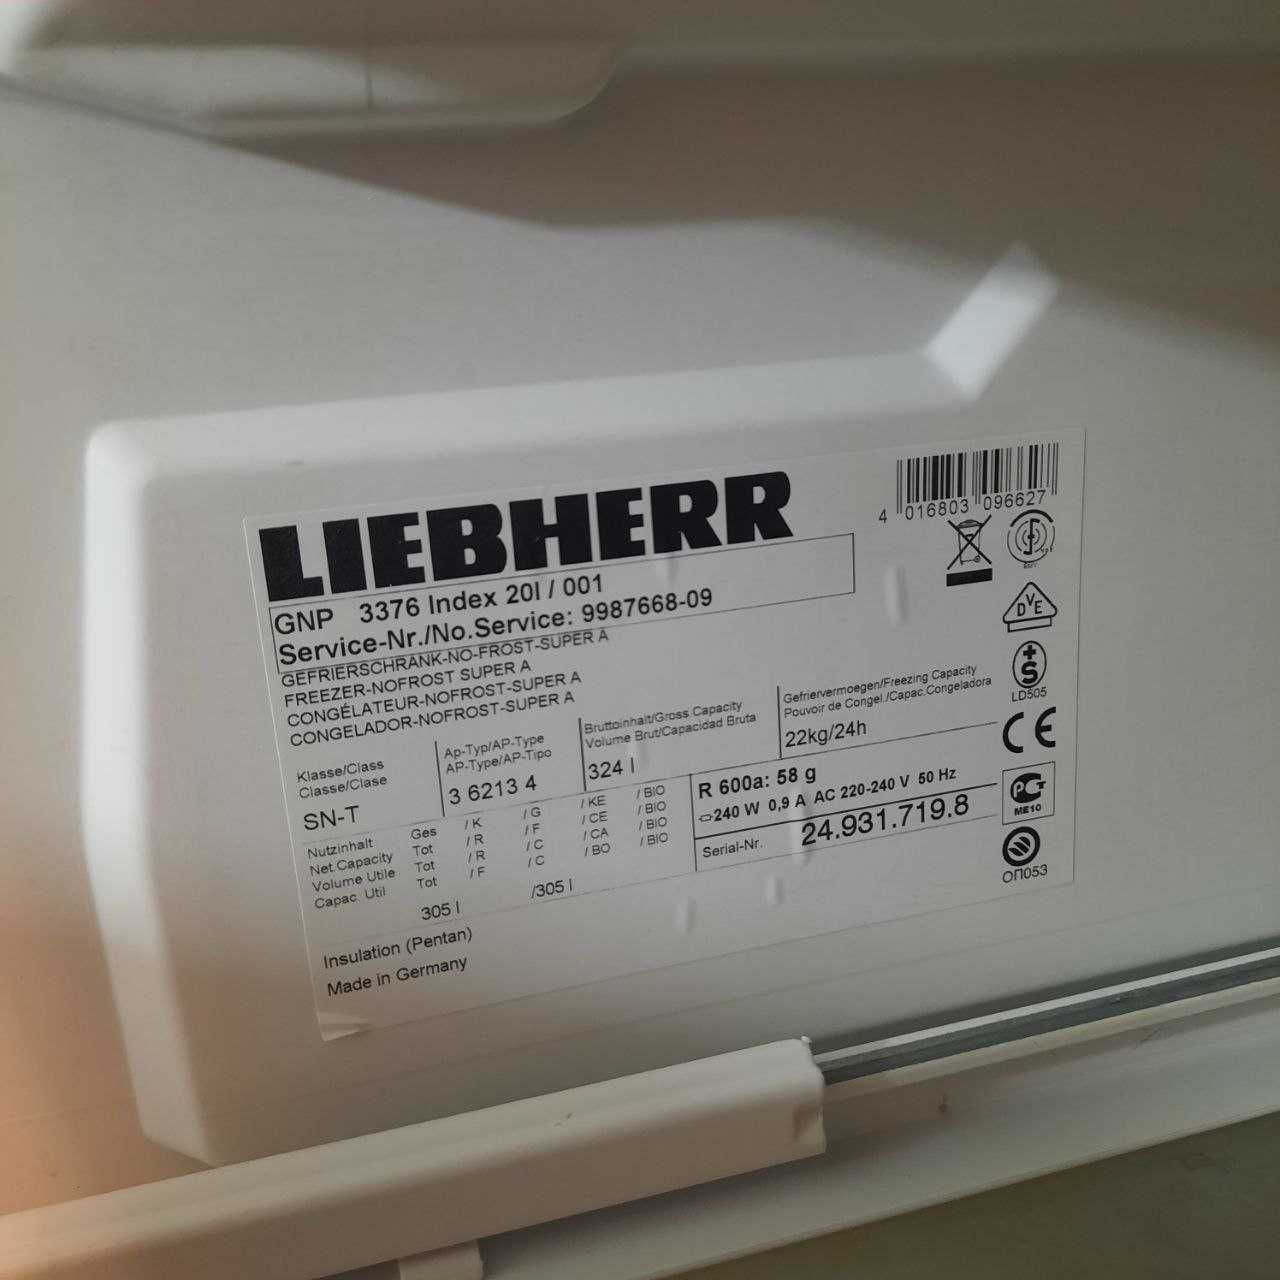 Продам рабочую морозильную камеру Liebherr  GNP 3376 б/у , не дорого .